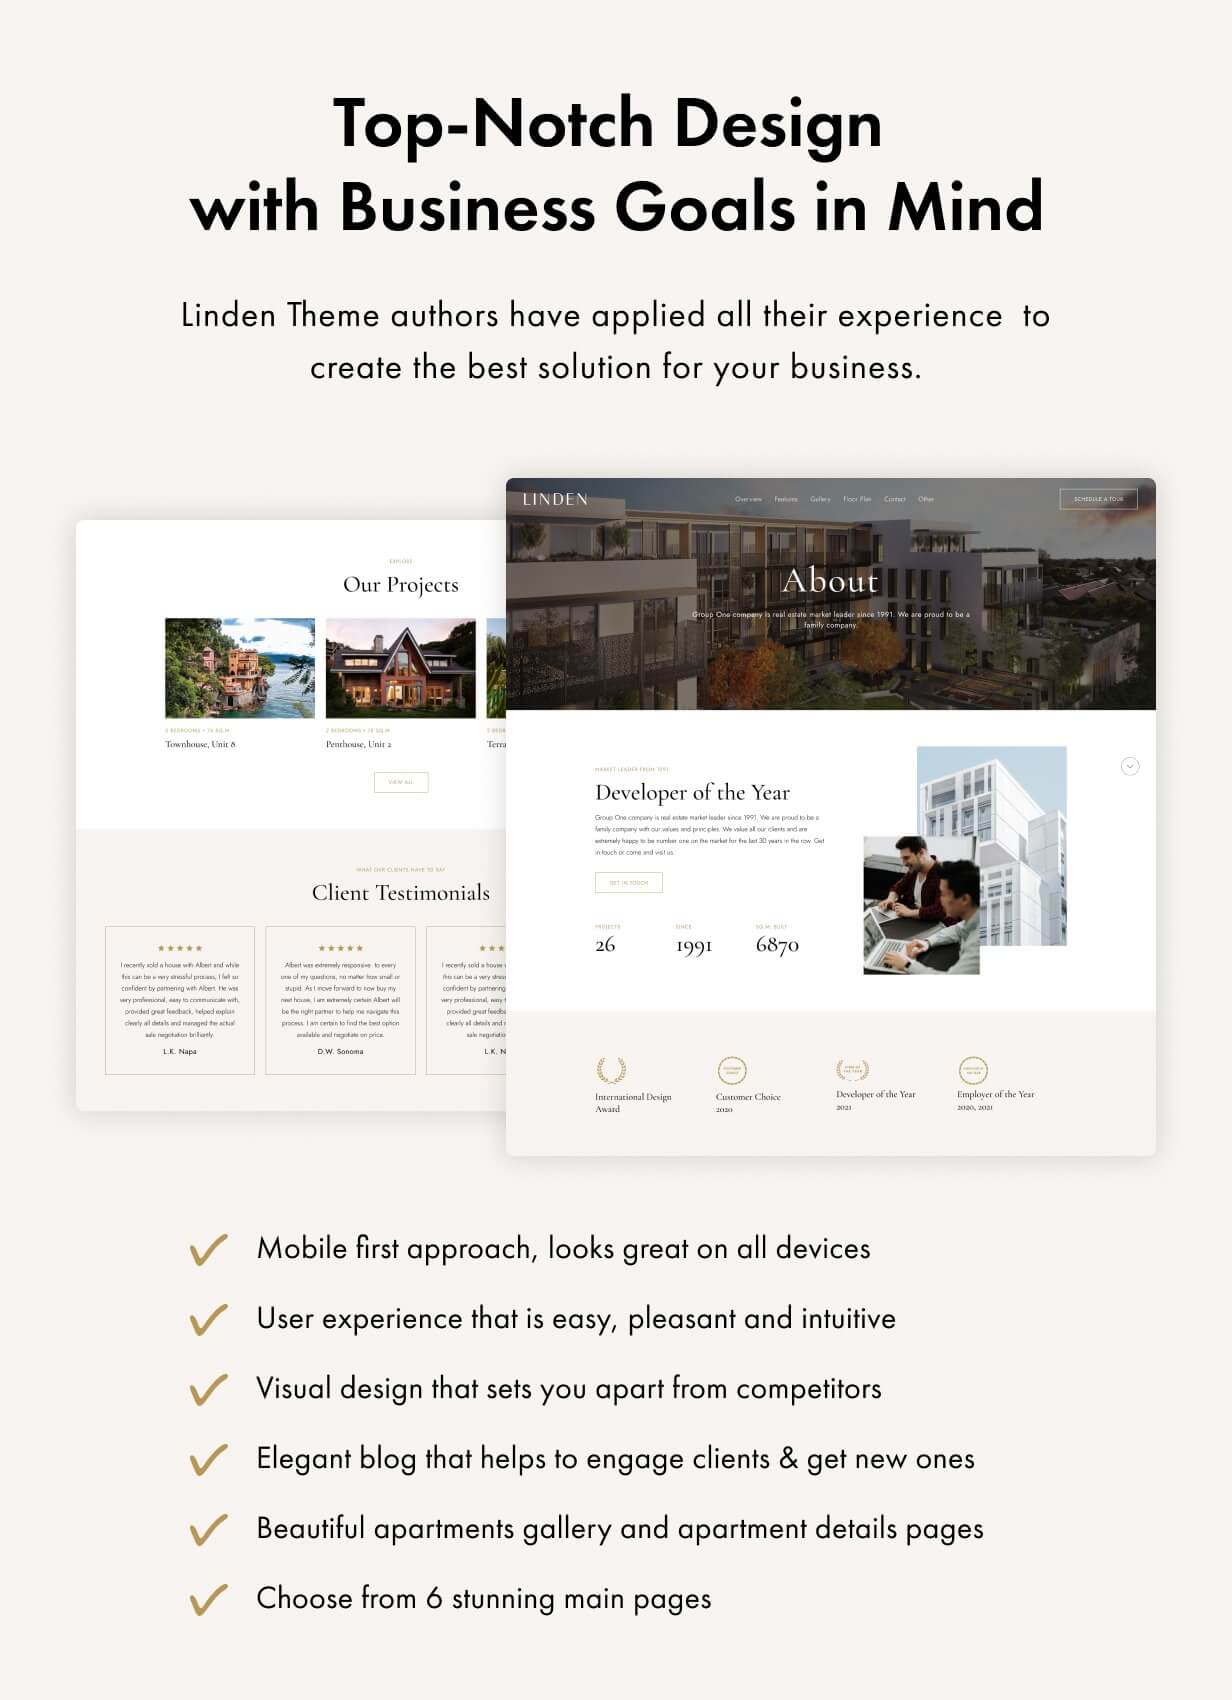 Linden — Single Property WordPress Theme